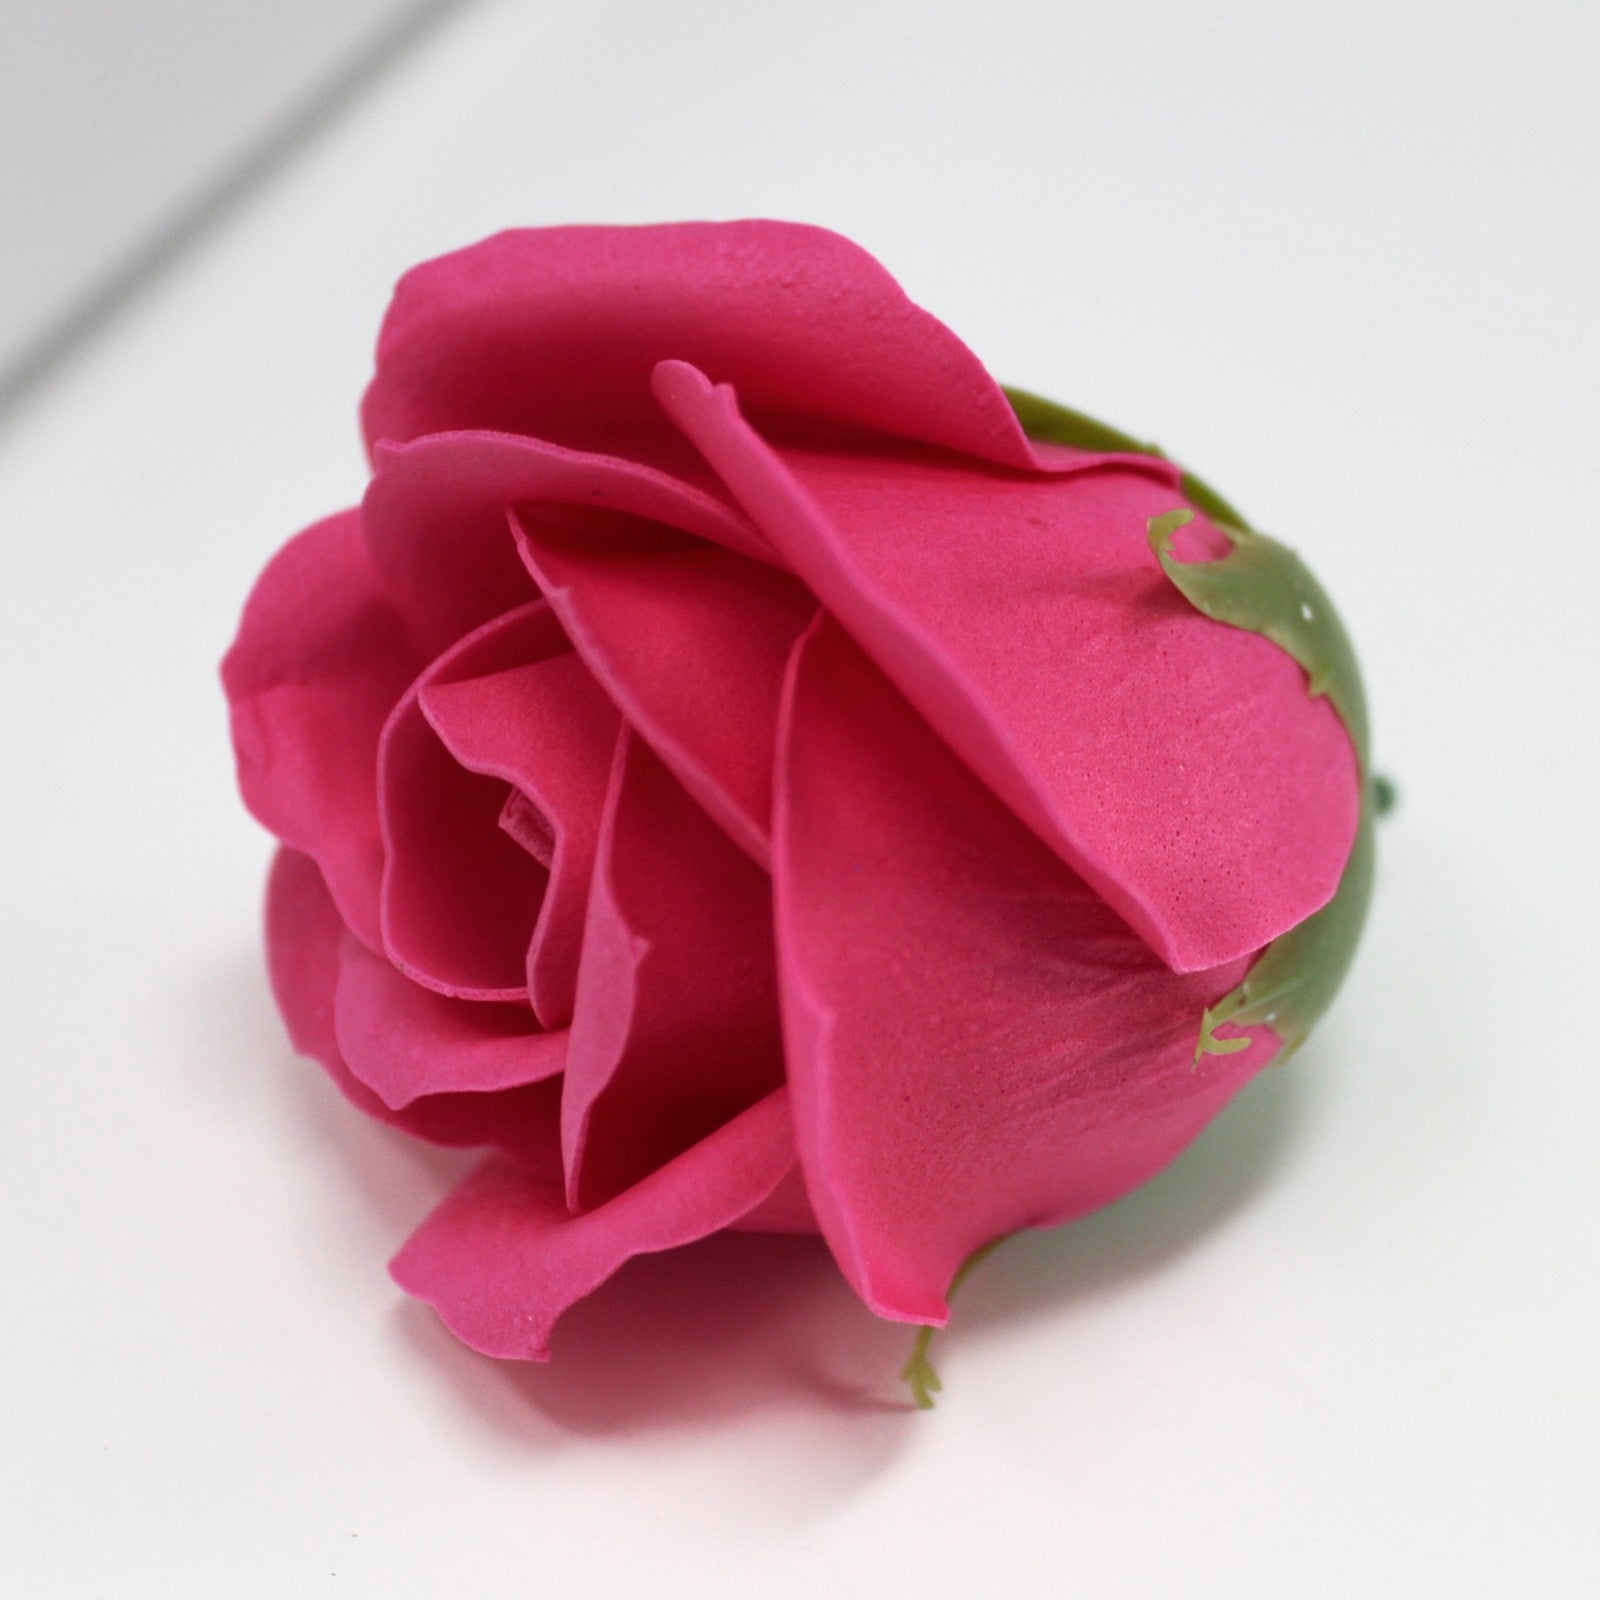 View Craft Soap Flowers Med Rose Rose x 10 pcs information